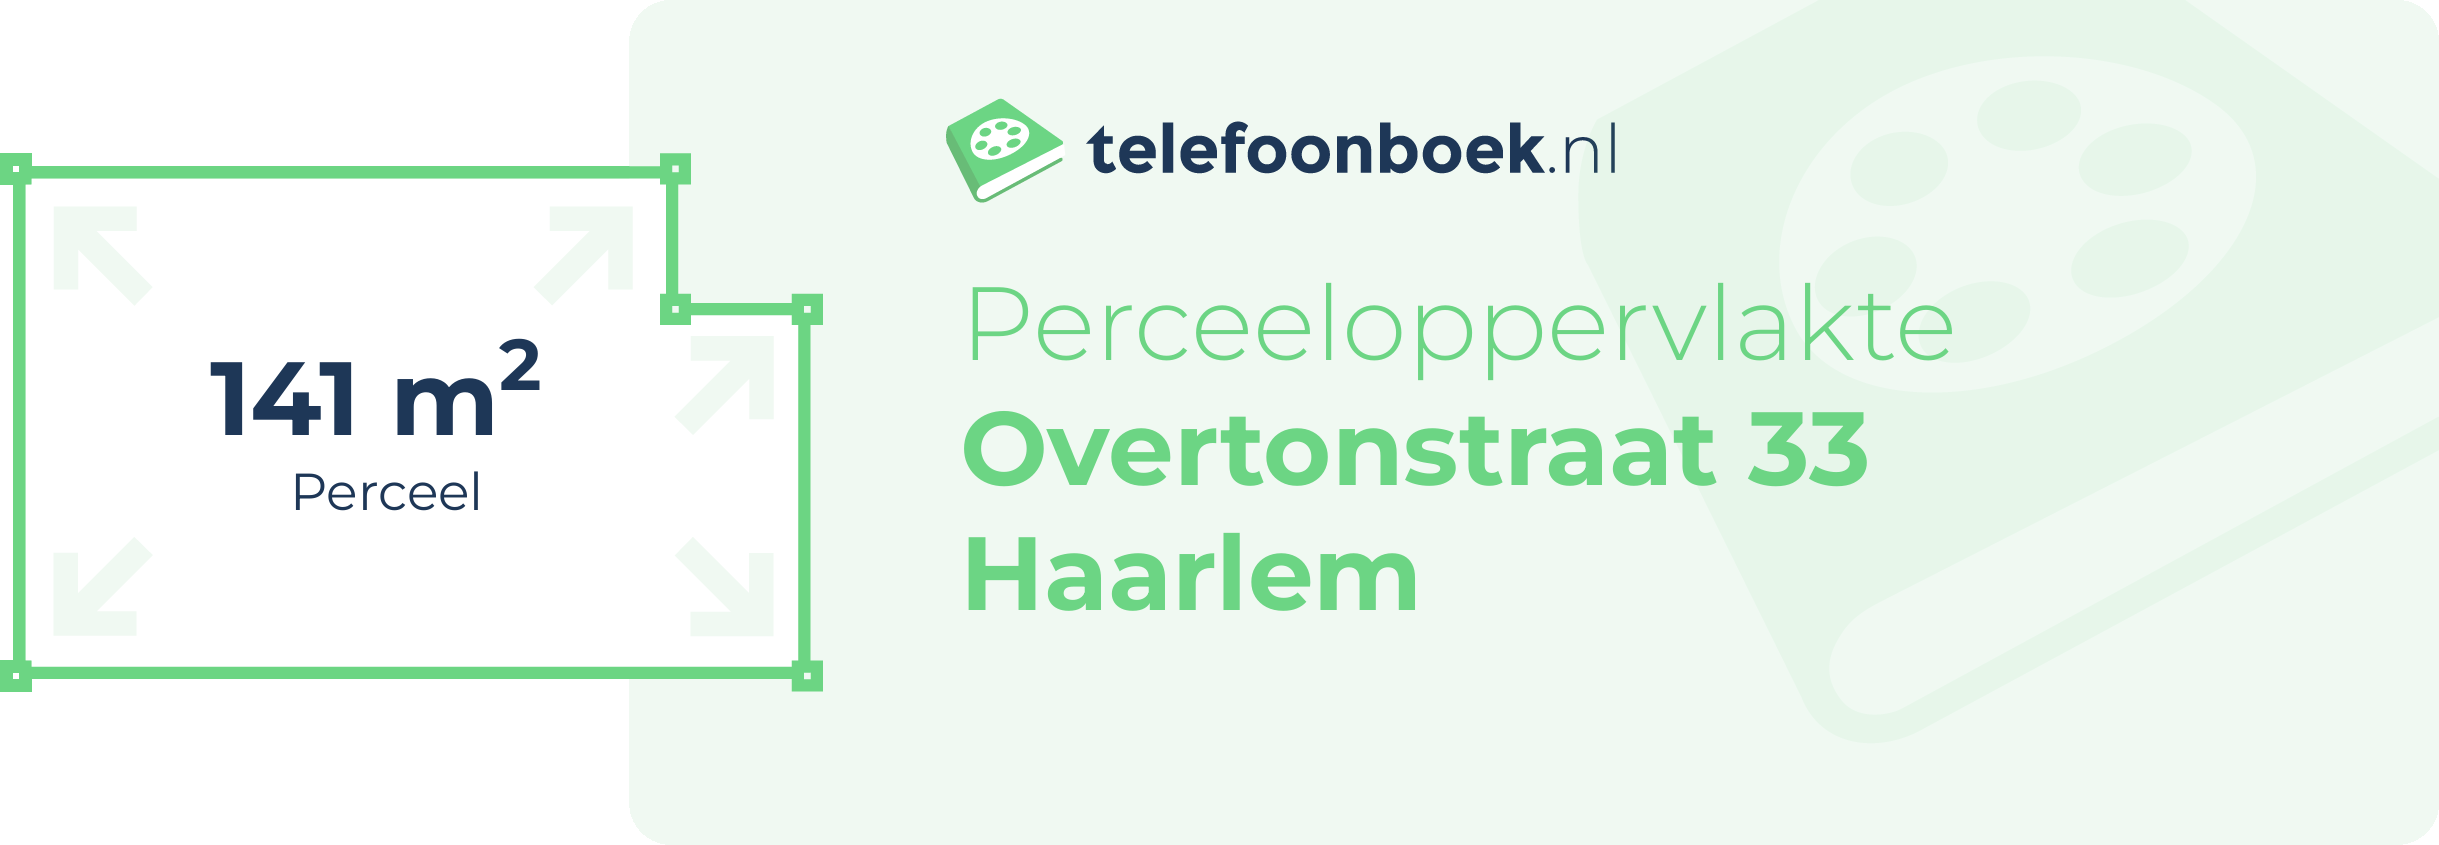 Perceeloppervlakte Overtonstraat 33 Haarlem